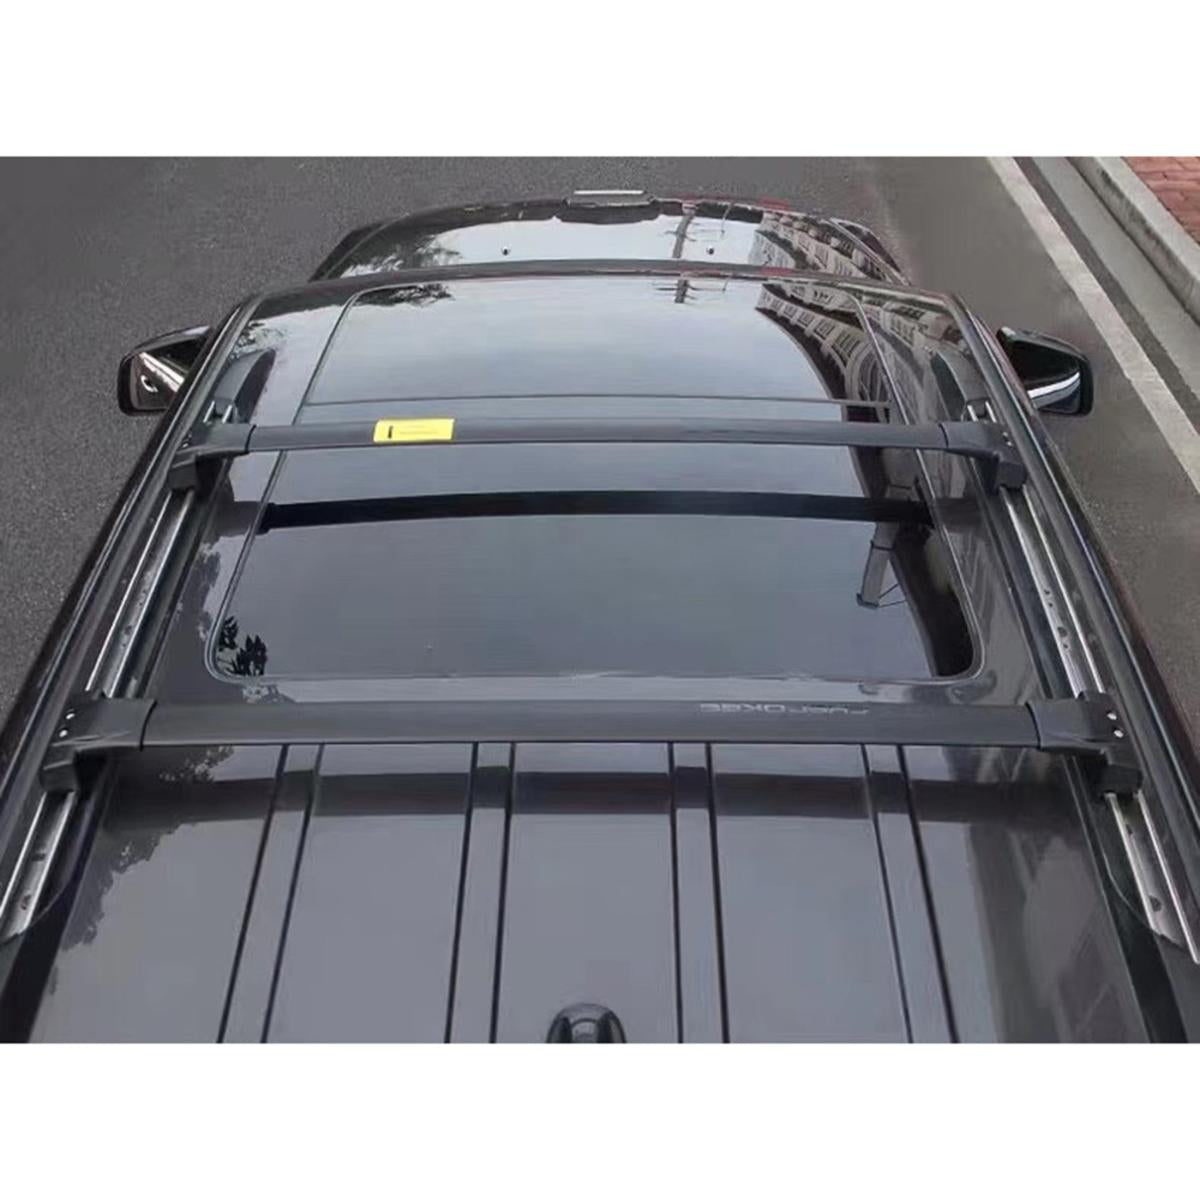 Trustmade 4 x 4 Car Parts Aluminium Roof Rack for Jeep Grand Cherokee 2011-2019